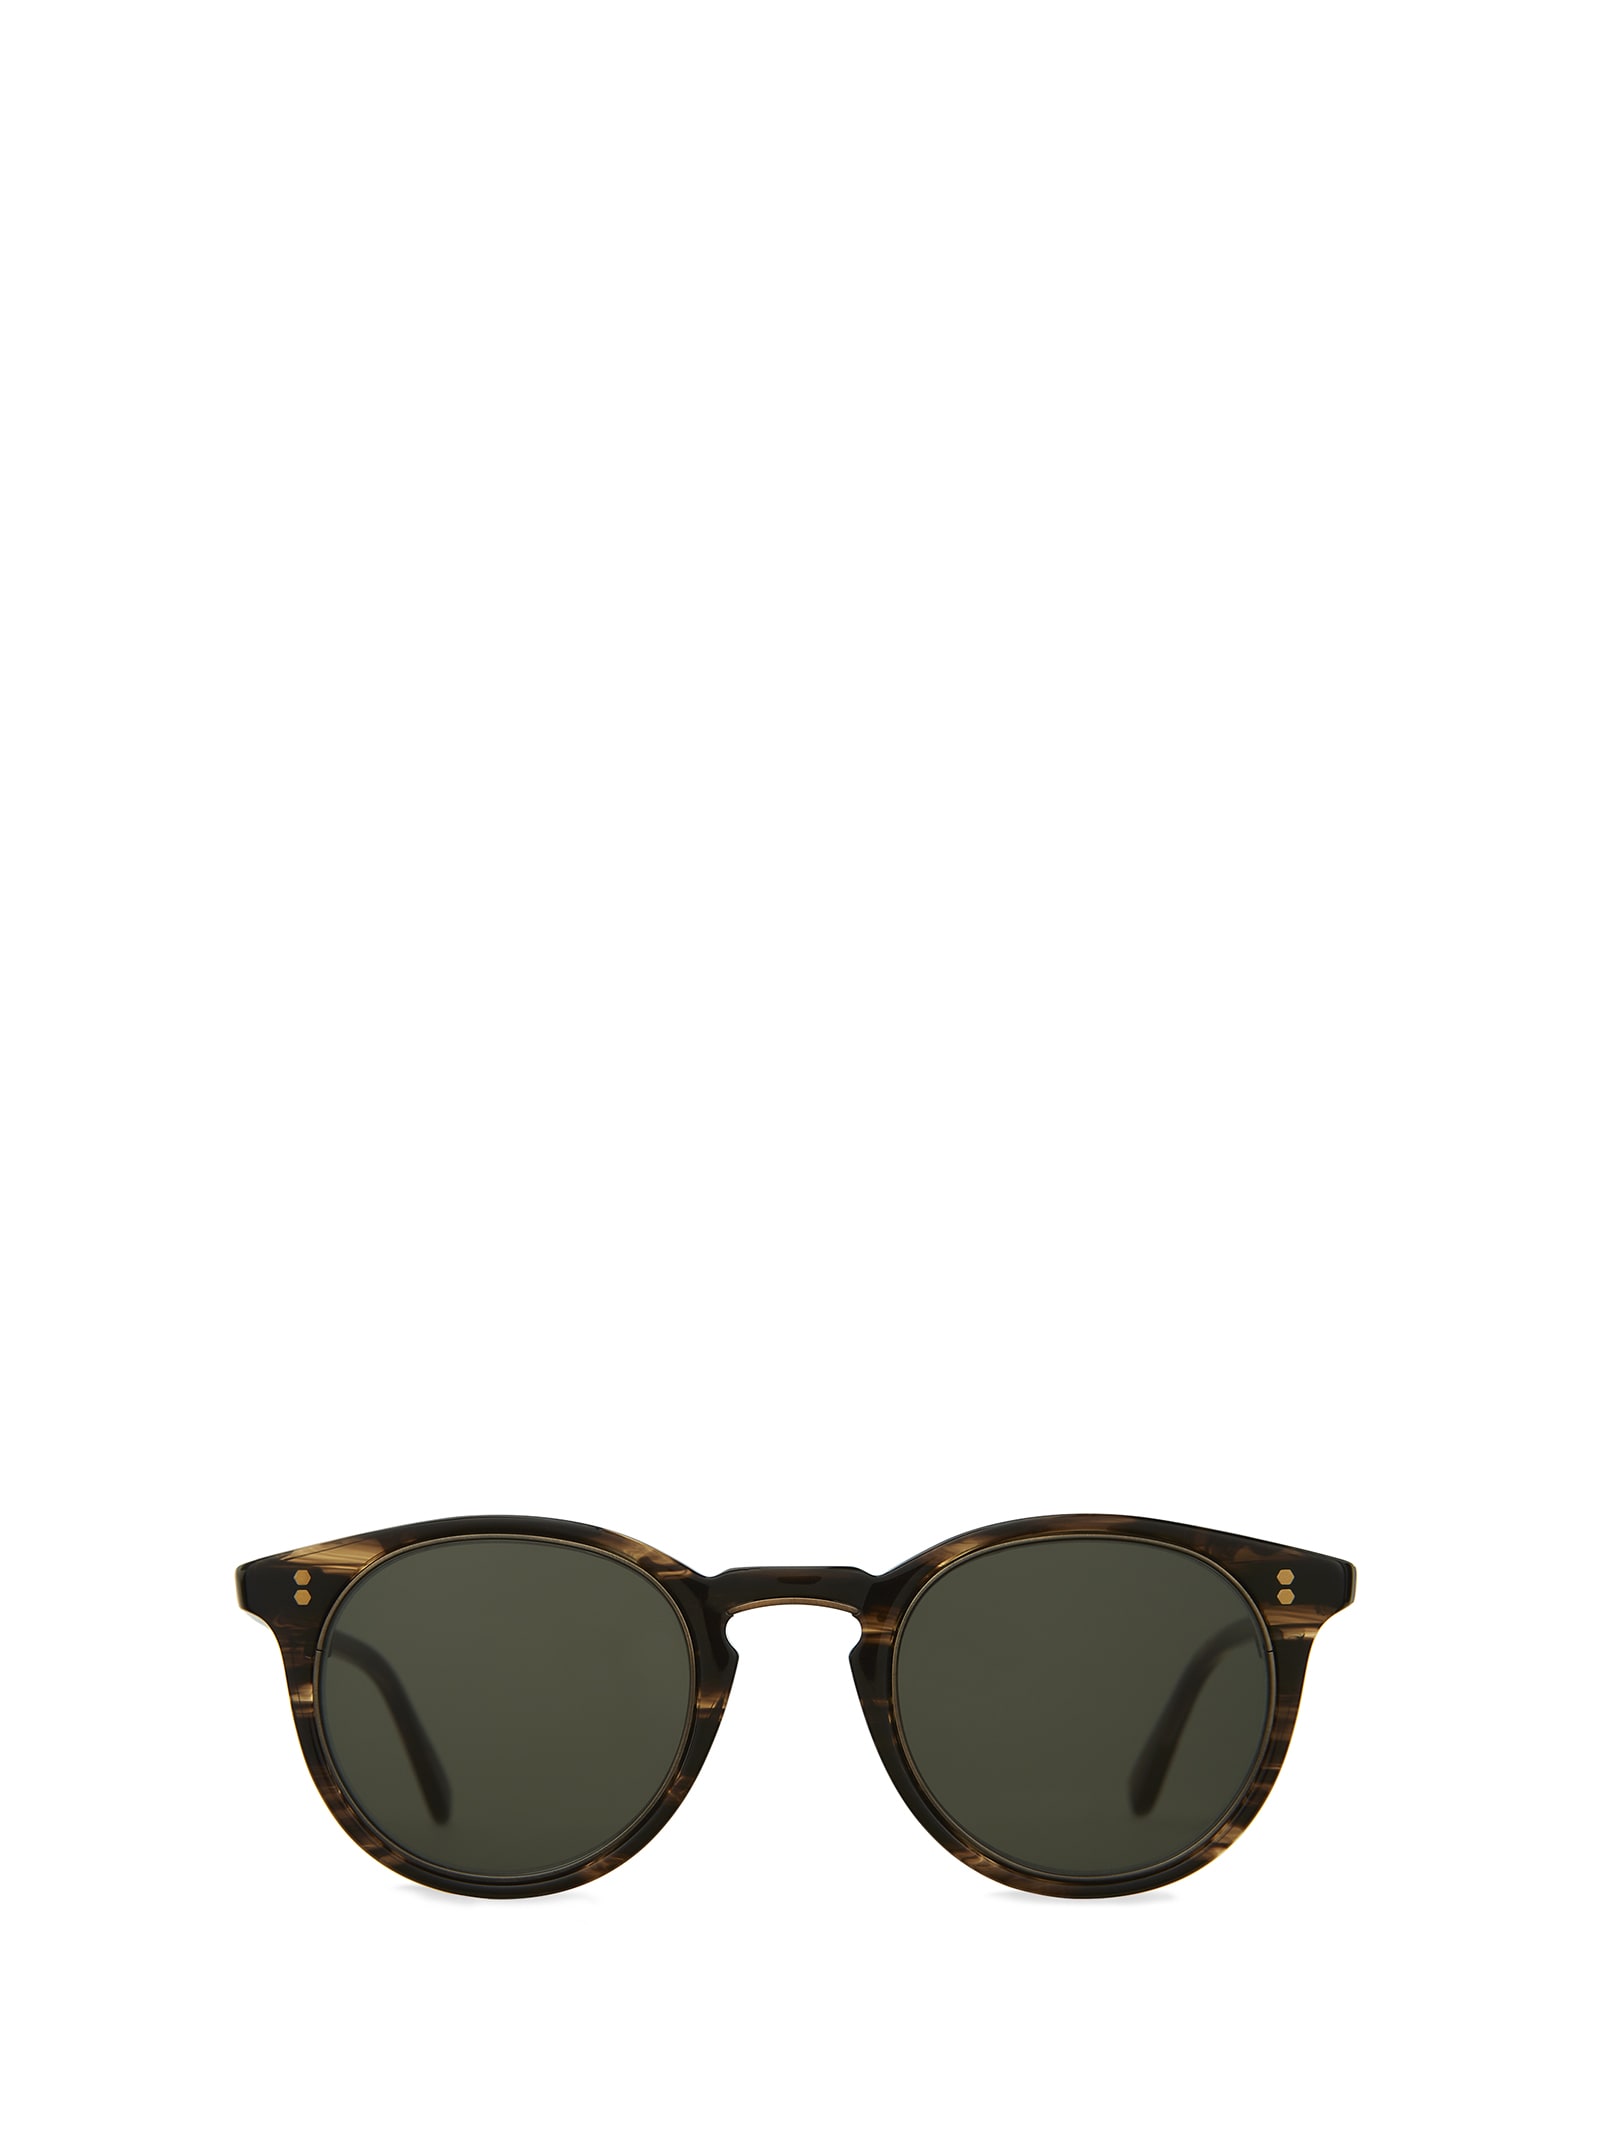 mr. leight crosby s porter tortoise - antique gold sunglasses